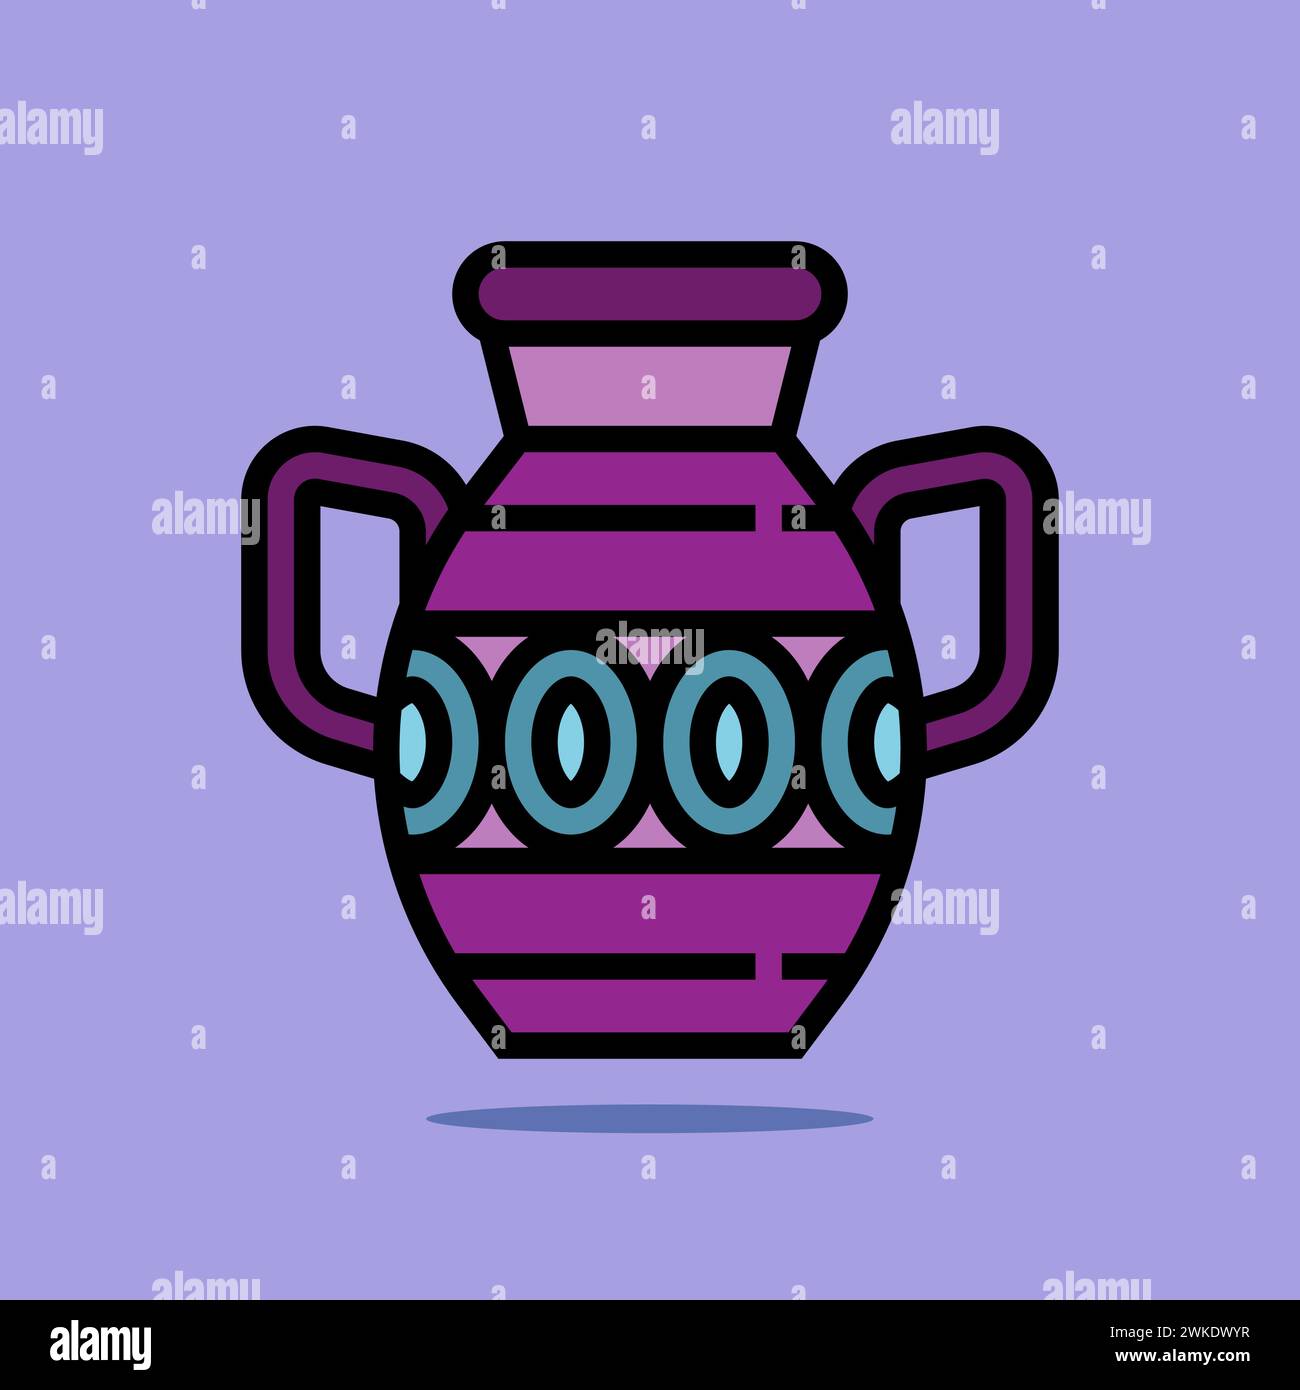 Art illustration symbol icon furniture logo household design sketch hand draw of vase urn Stock Vector